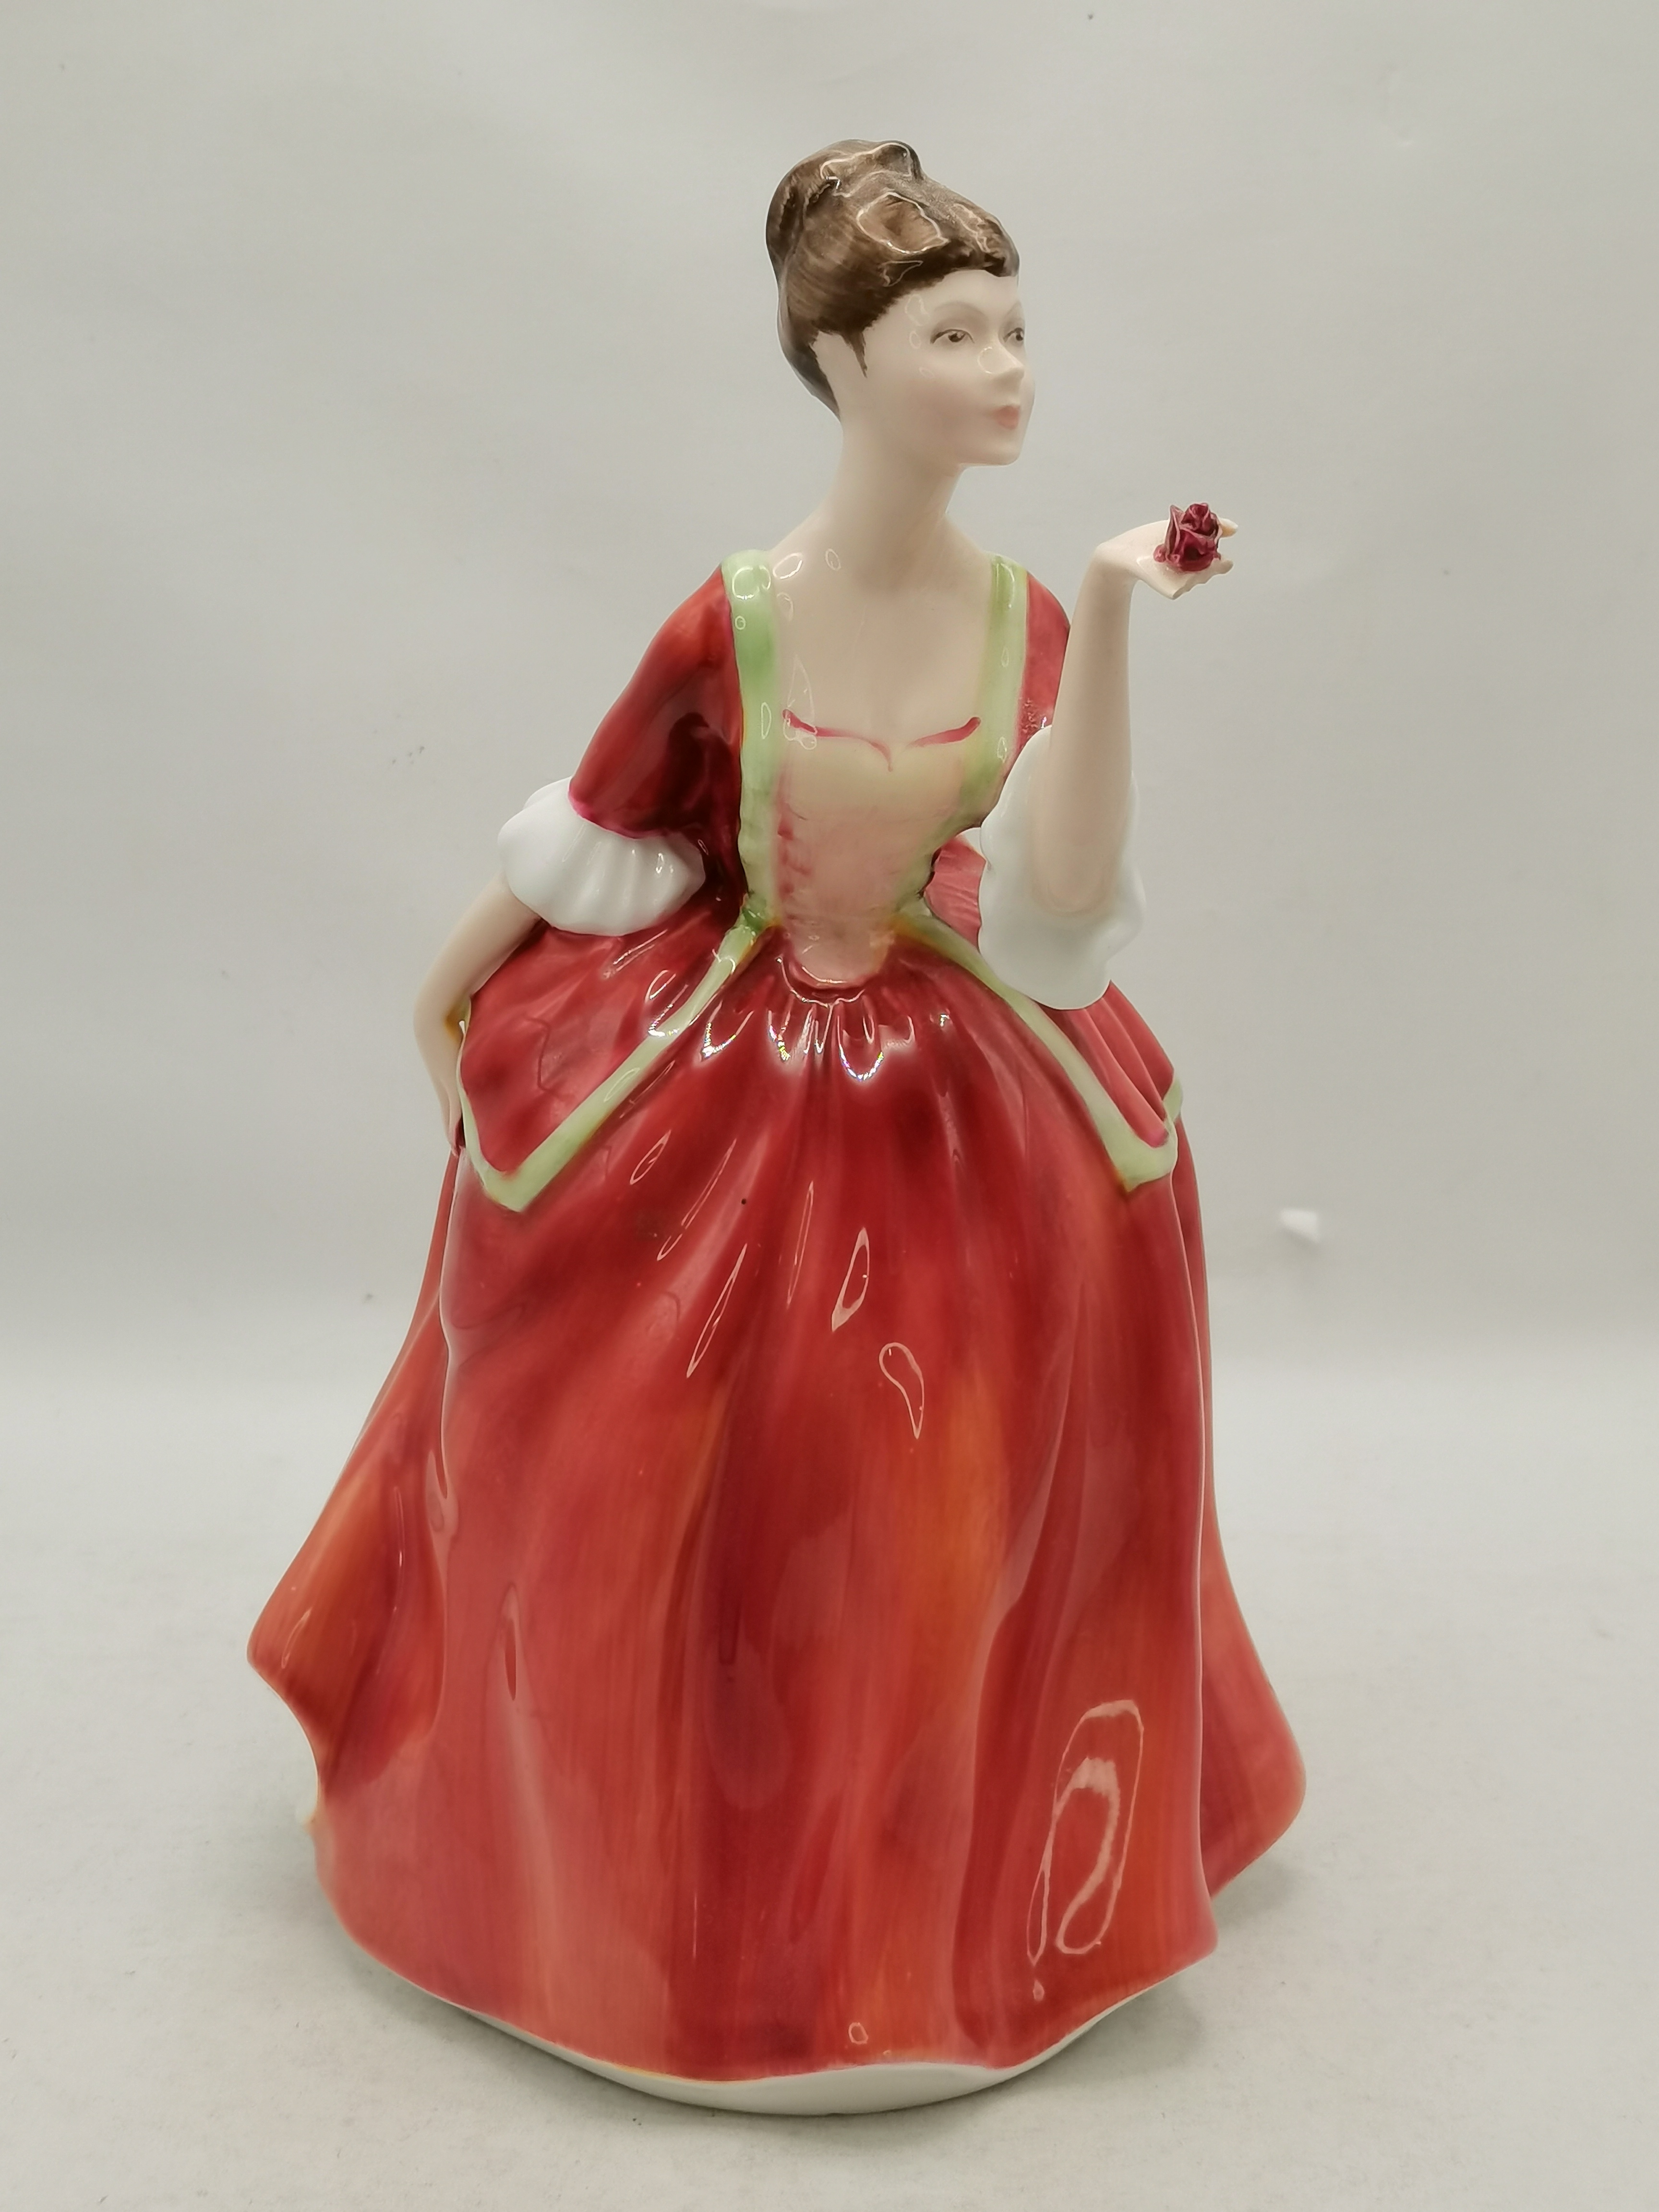 4 x Royal Doulton lady figures plus one lady figure - Image 8 of 11